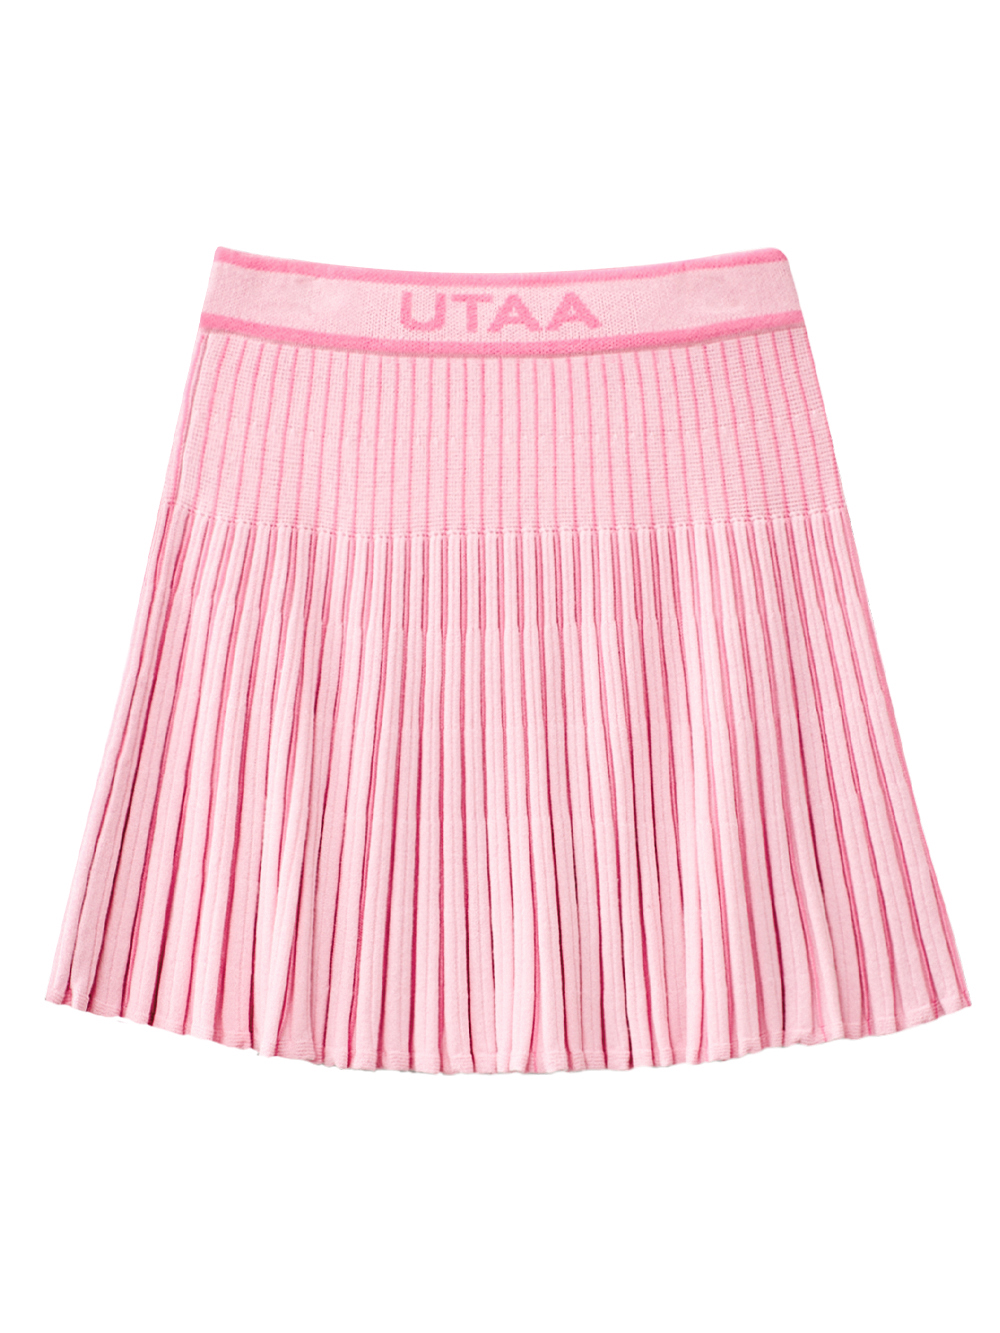 UTAA Vertical Stripe Pleats Long Skirt : Light Pink (UB3SKF420LP)